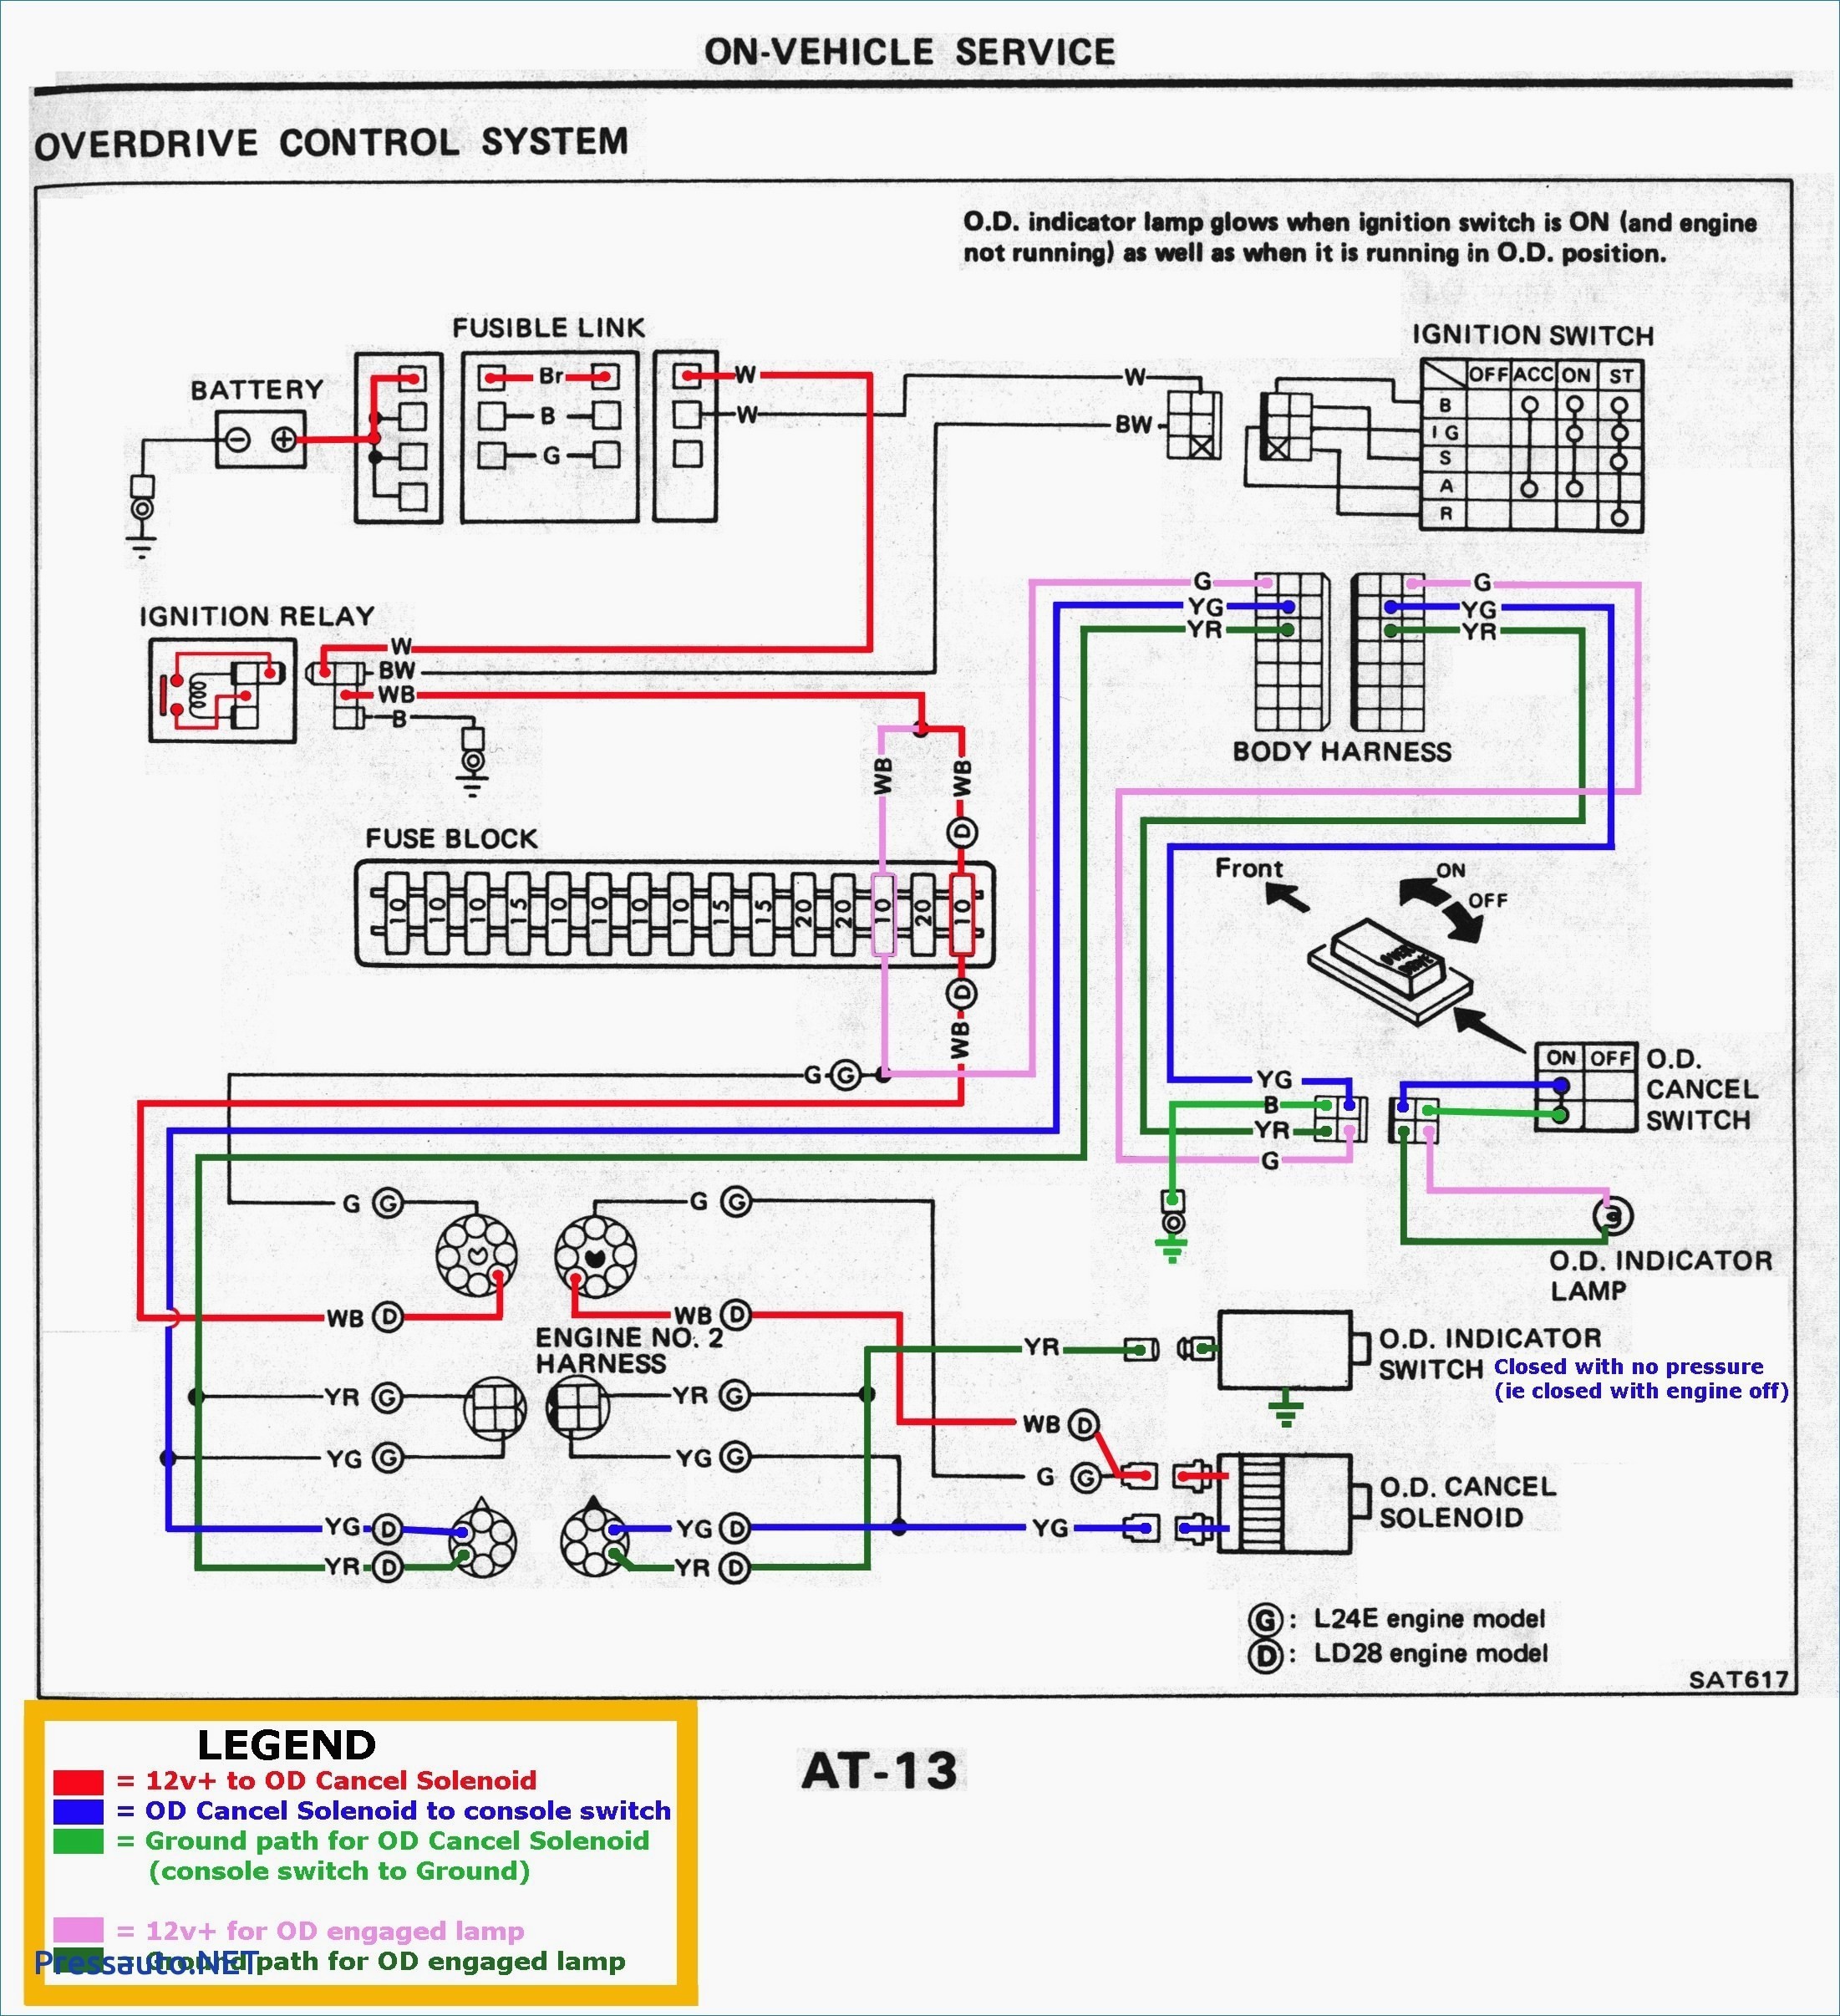 2004 Gmc Sierra Wiring Diagram 2005 Gmc Sierra 2500hd Wiring Diagram Wiring Diagram toolbox Of 2004 Gmc Sierra Wiring Diagram